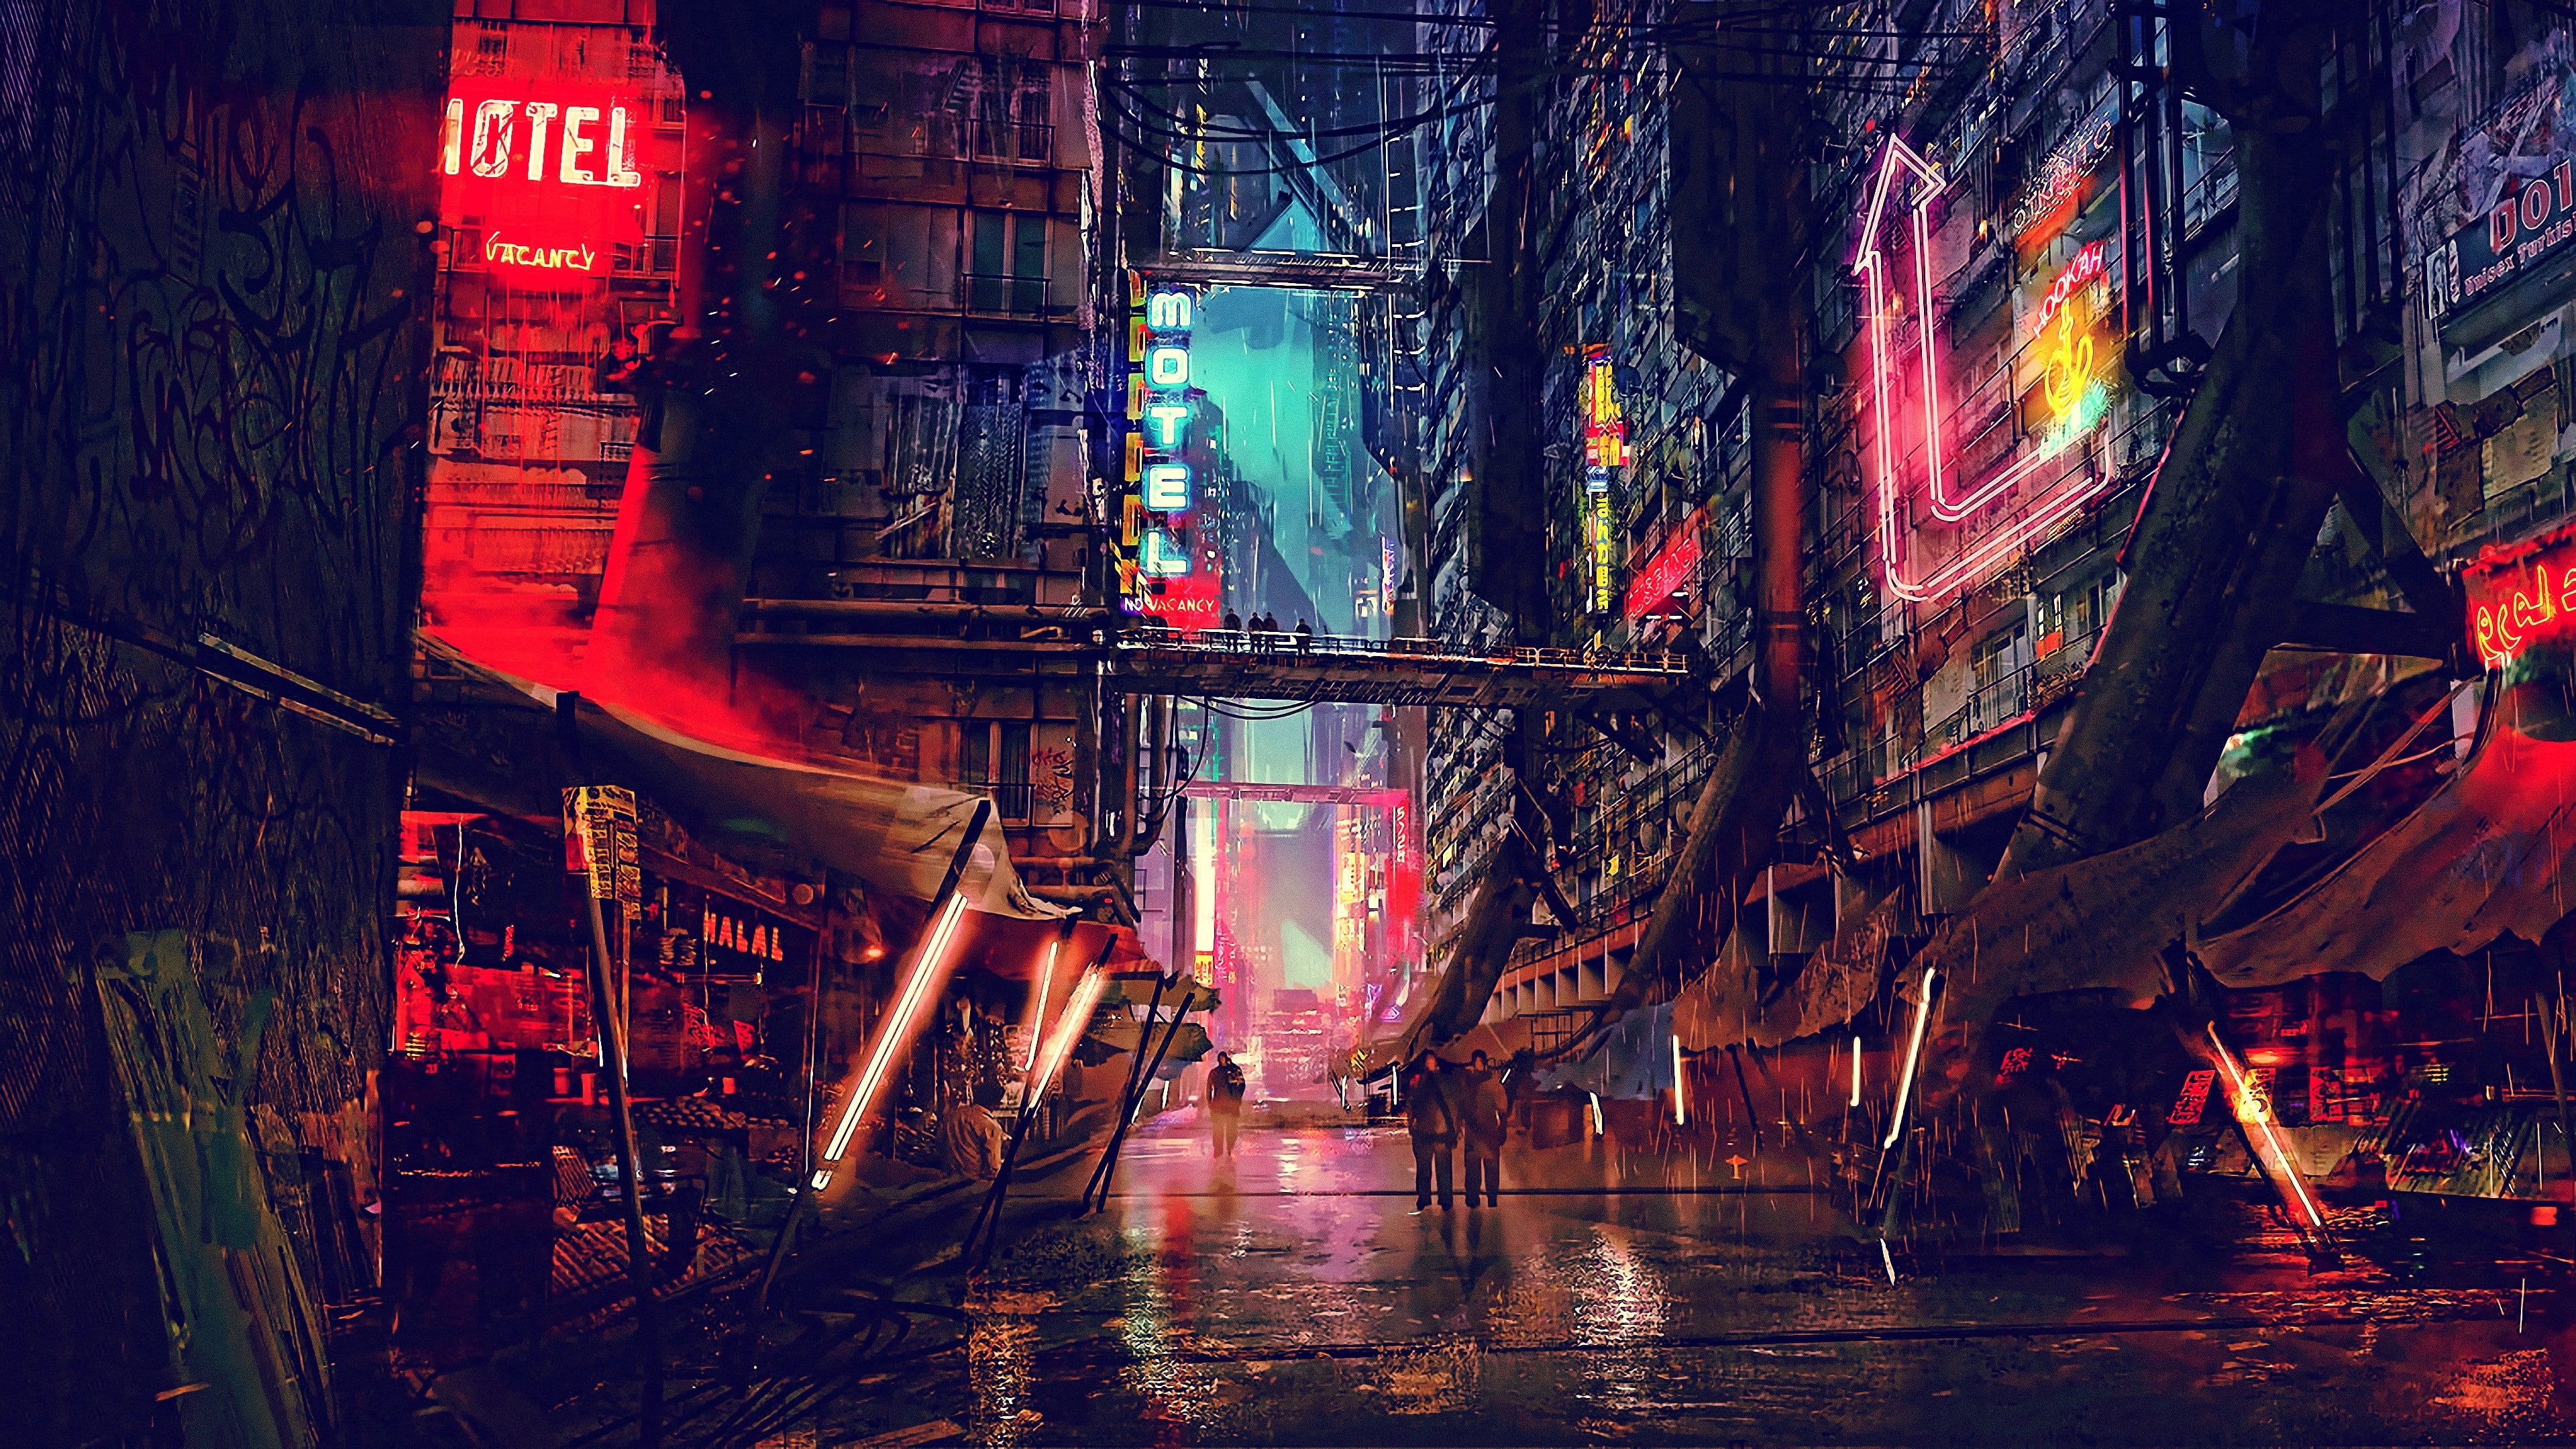 street #art #artwork digital art futuristic city #darkness science fiction #scifi #cyberpunk #city #night. Futuristic city, Cyberpunk city, Building illustration